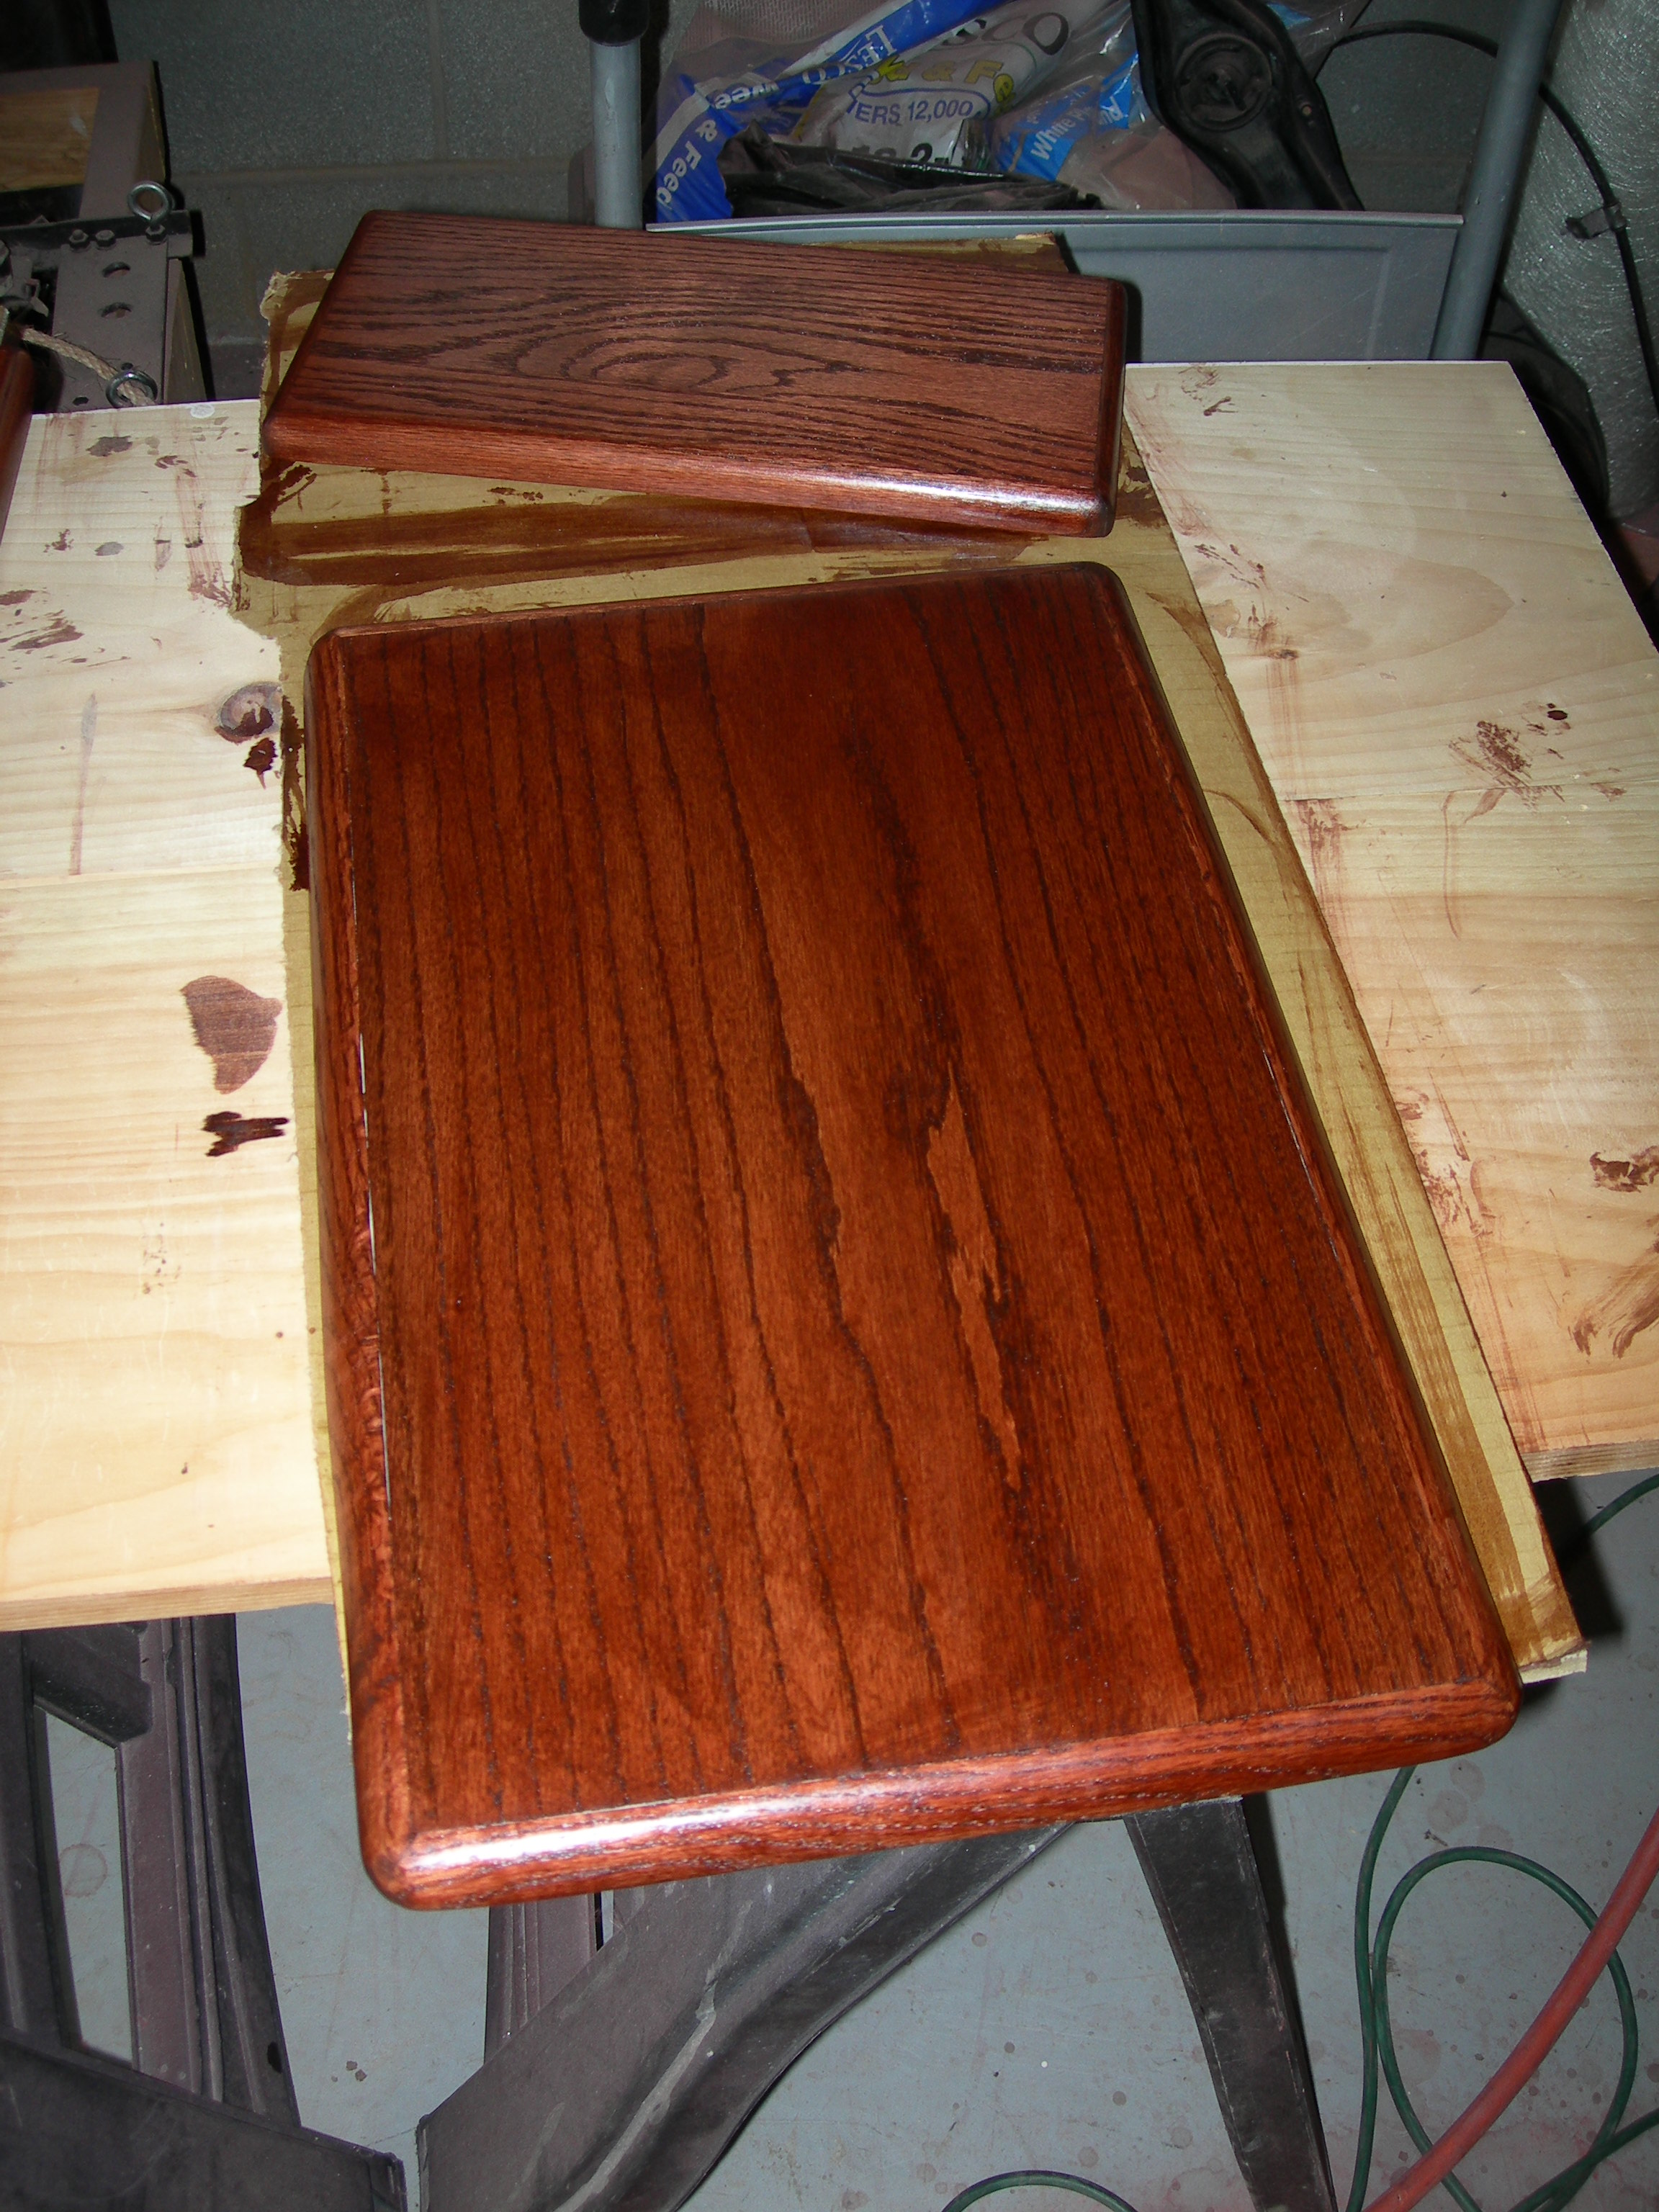 Stained hardwood trim